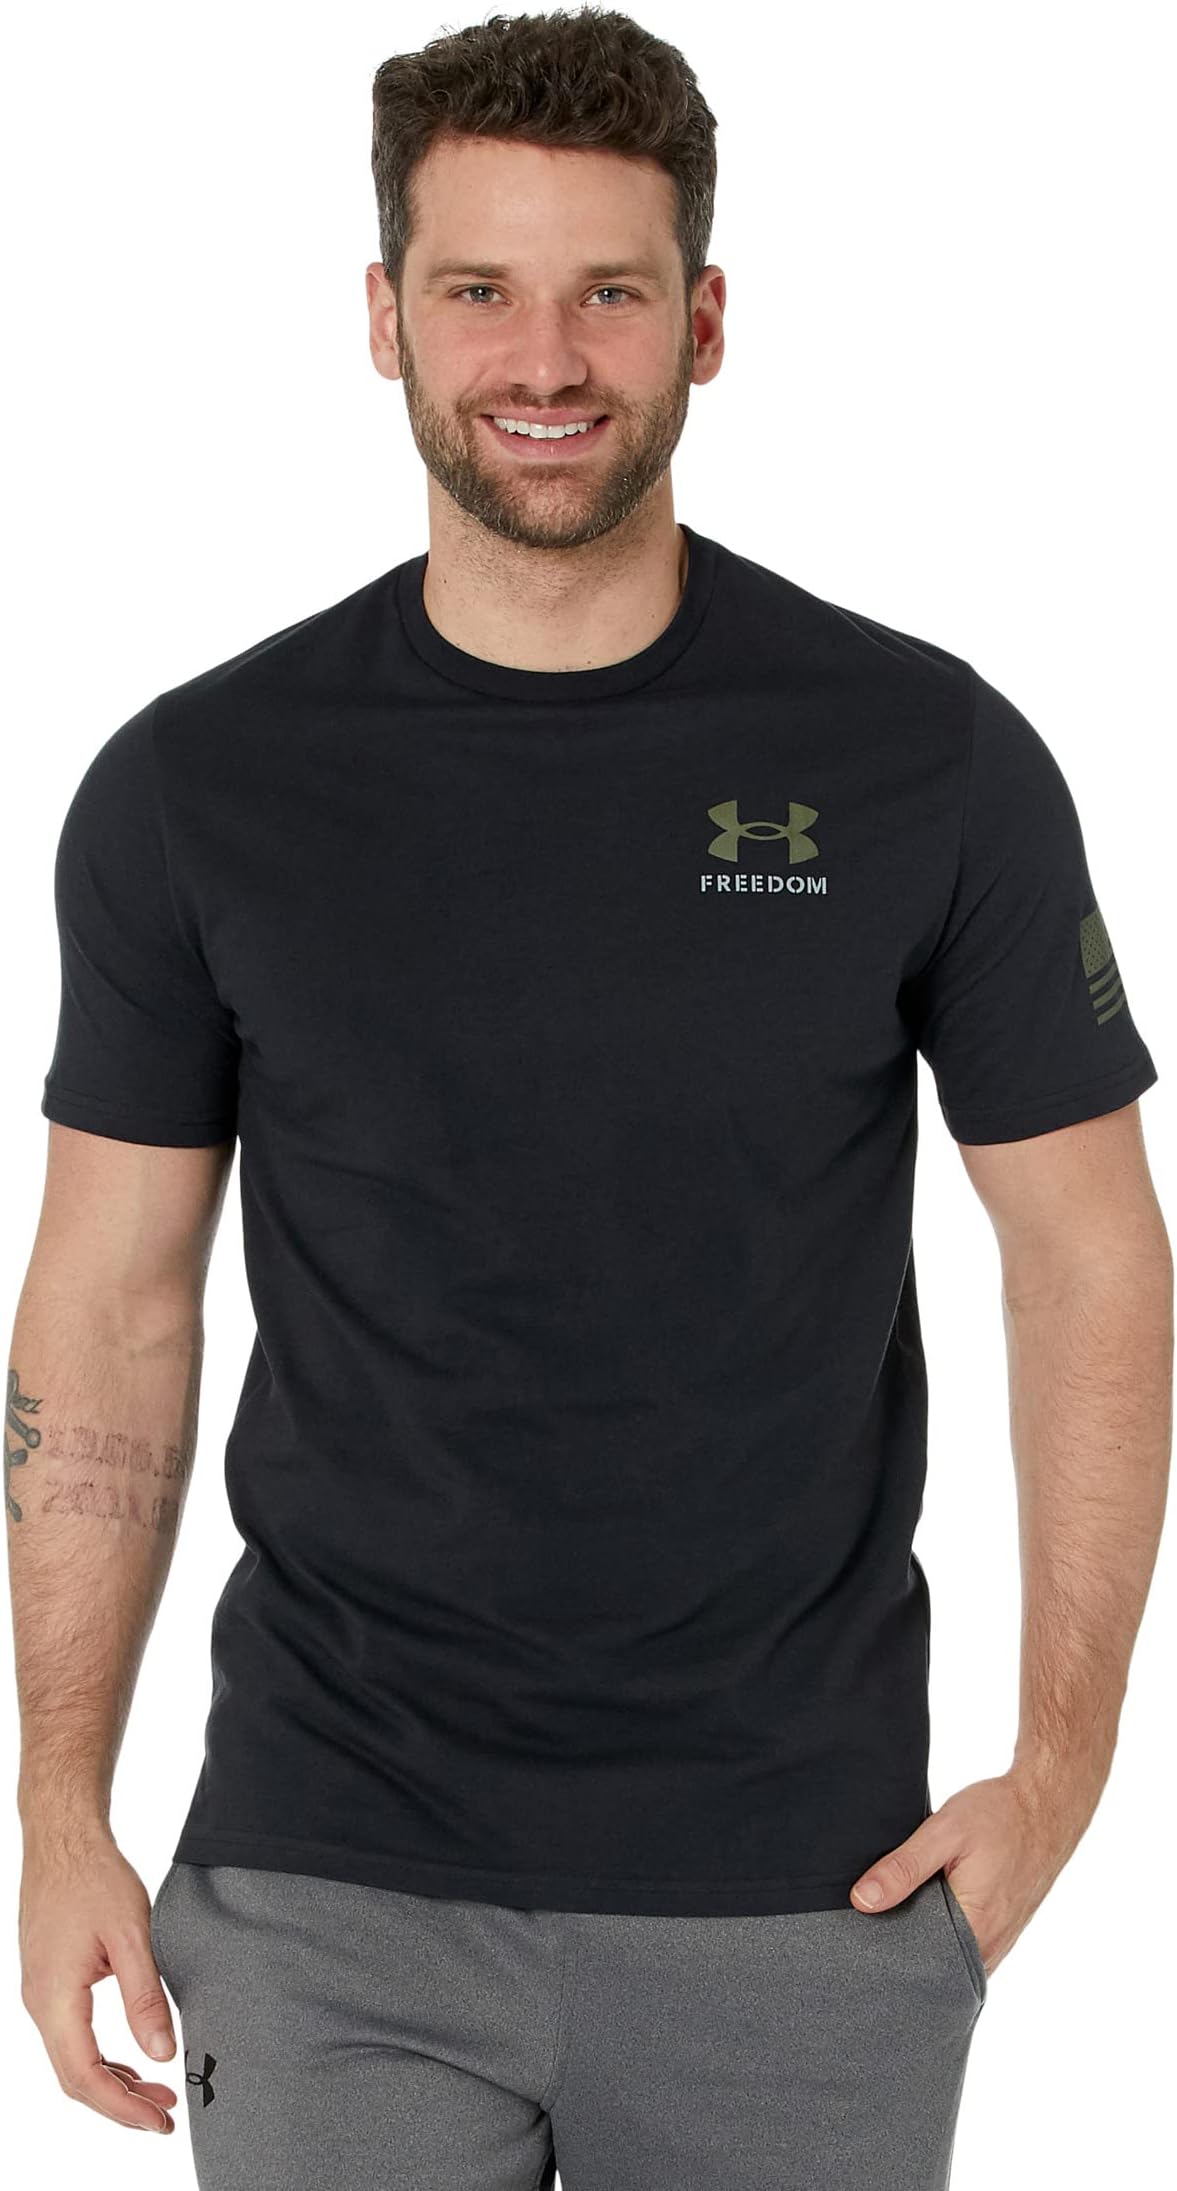 Новая футболка со знаменем свободы Under Armour, цвет Black/Steel фото